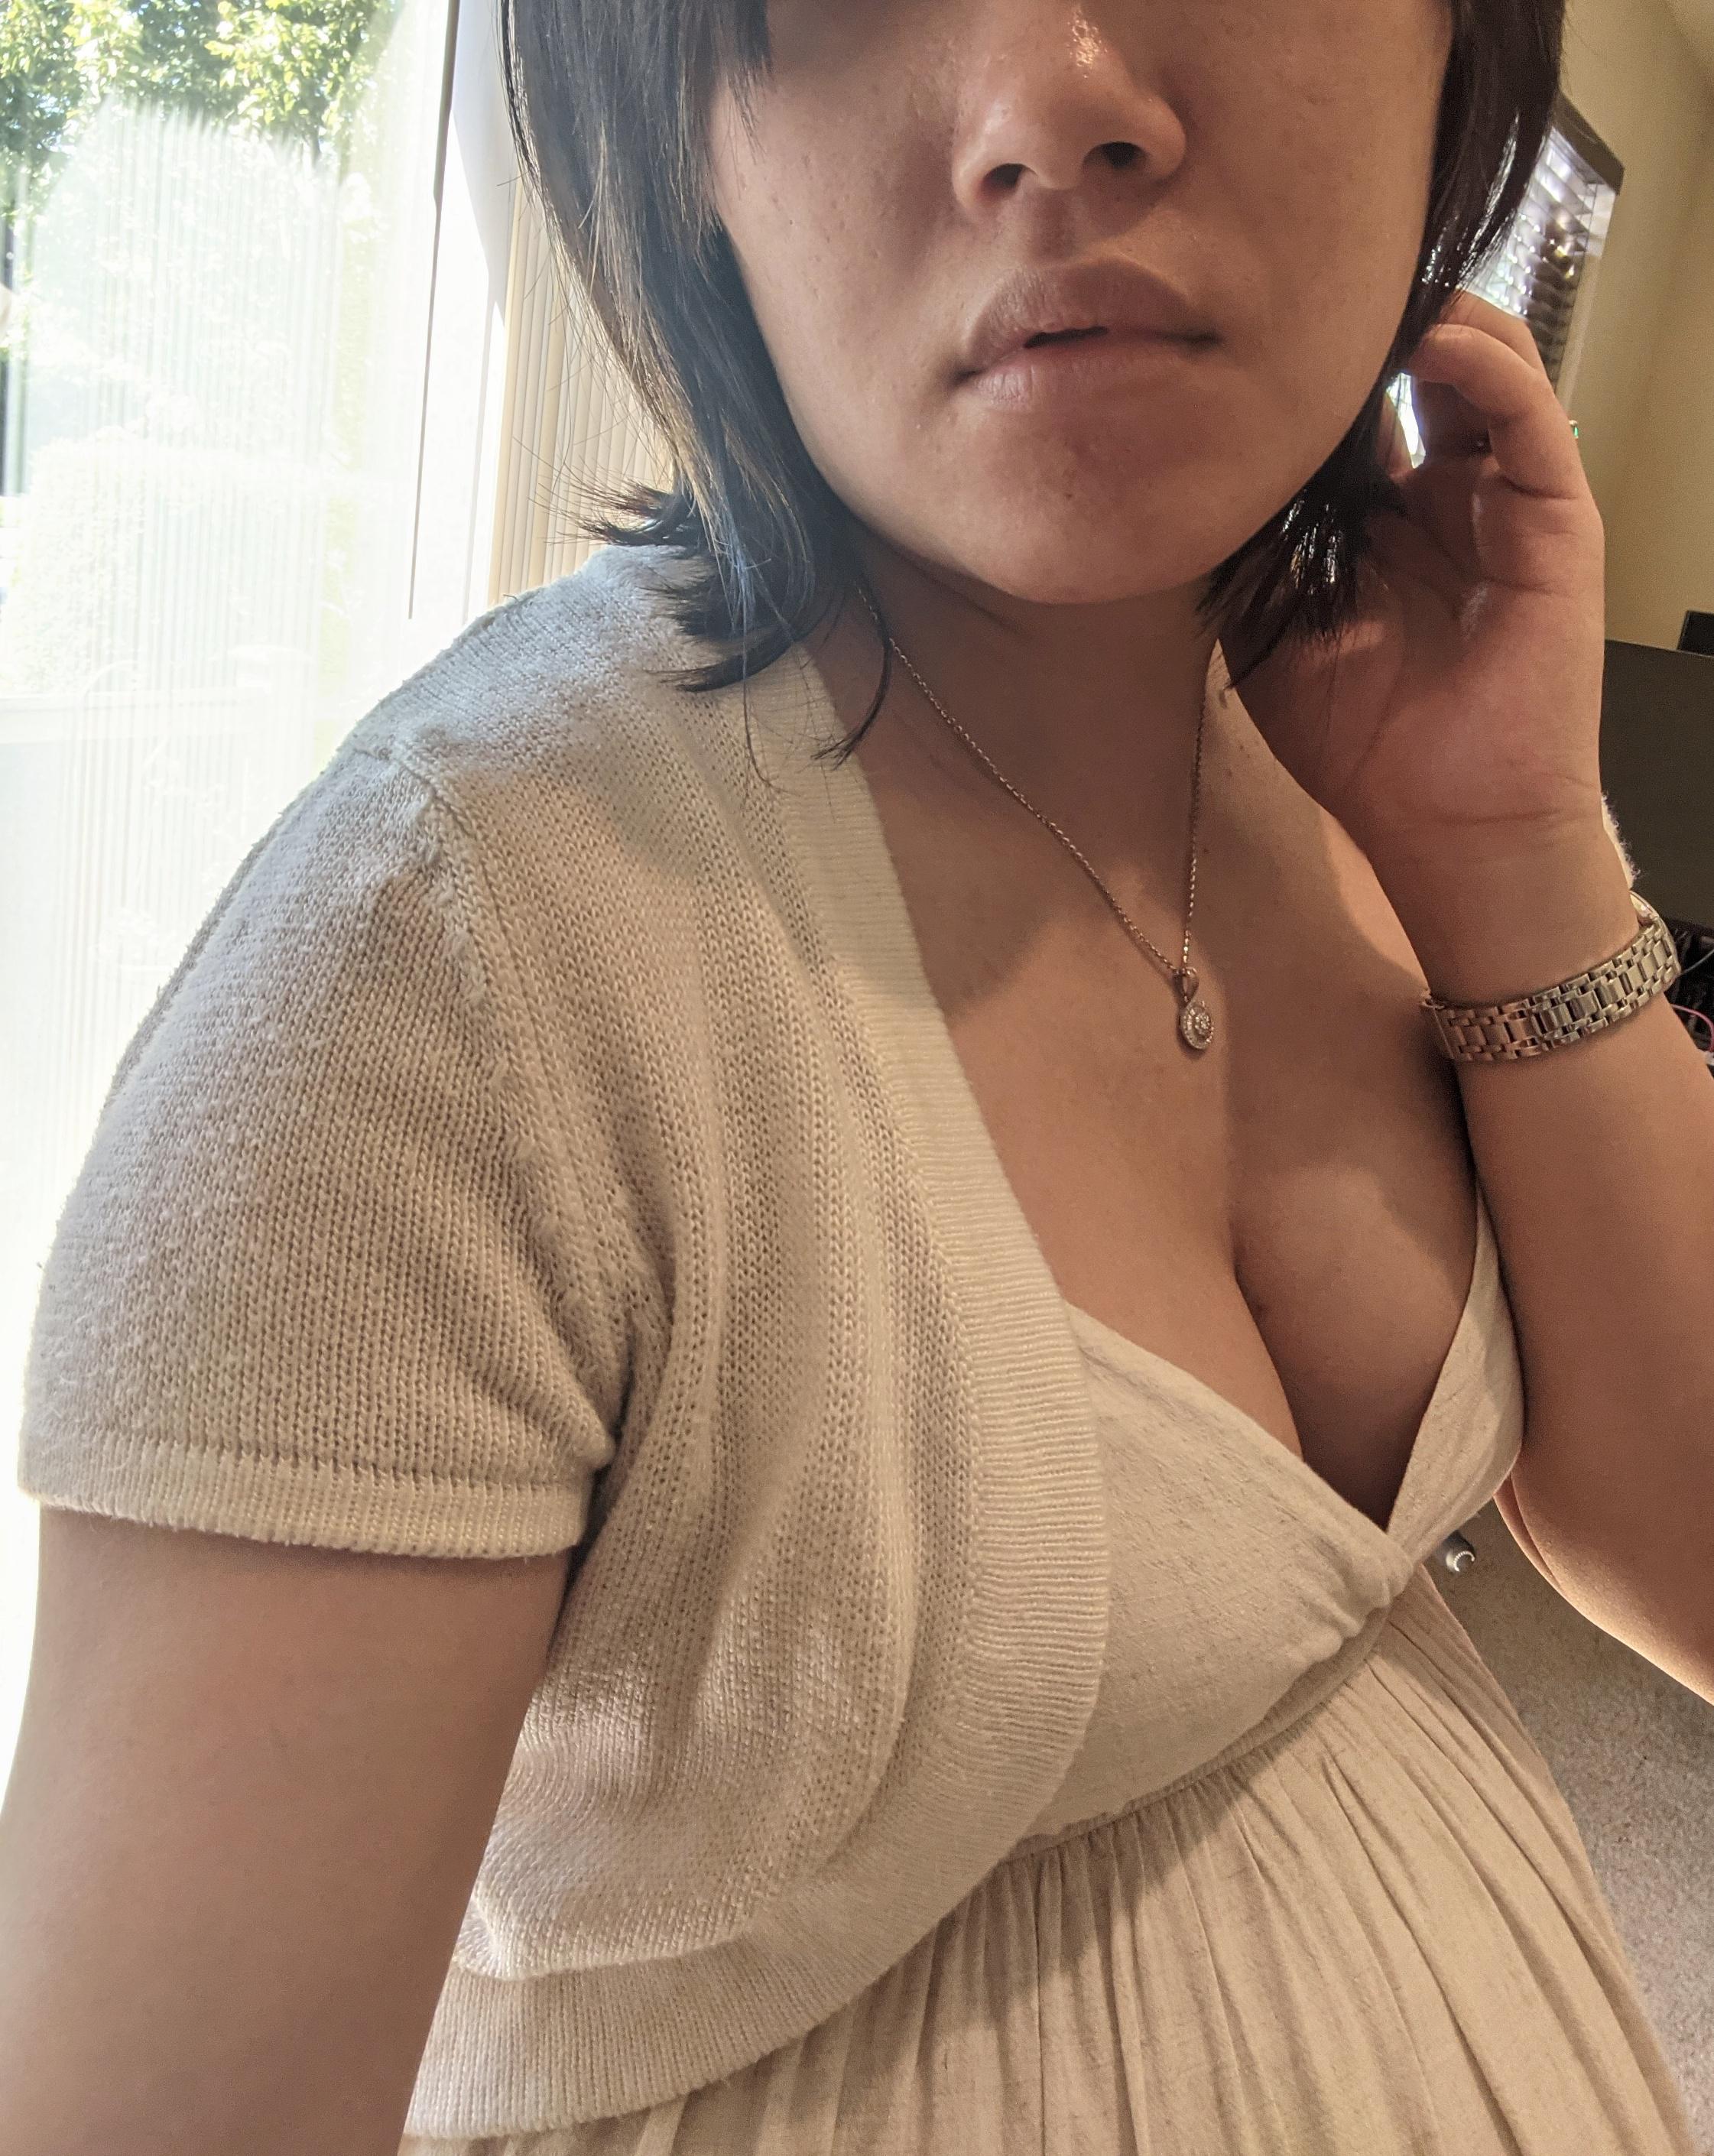 Cuckold husband expose pregnant hotwife asian